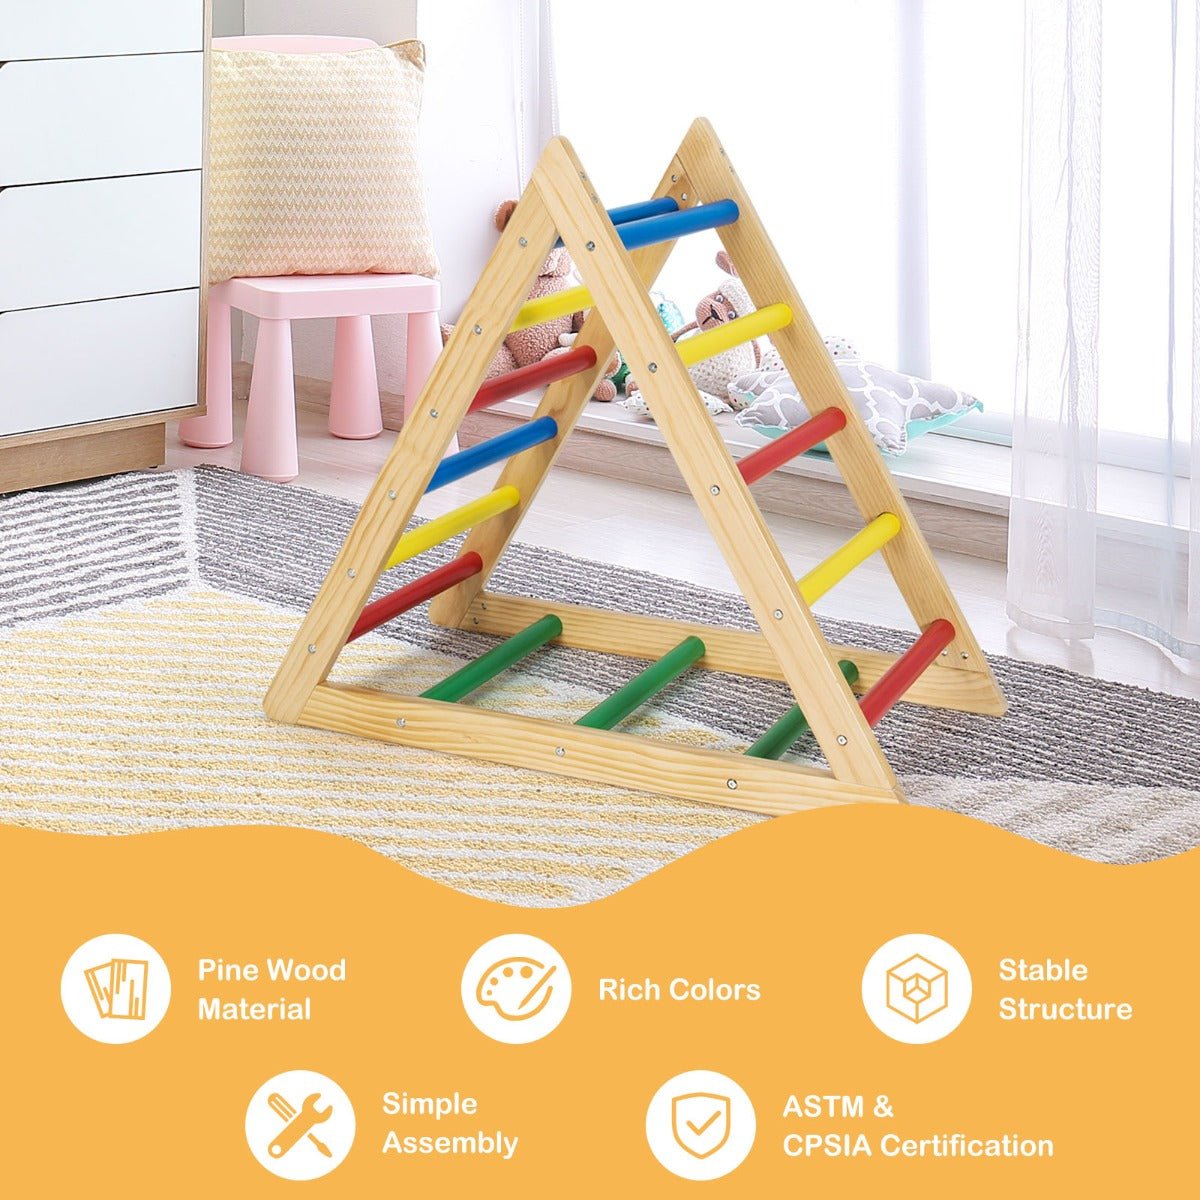 Wooden Climbing Triangle Ladder - Brighten Kid's Room with Playful Spirit